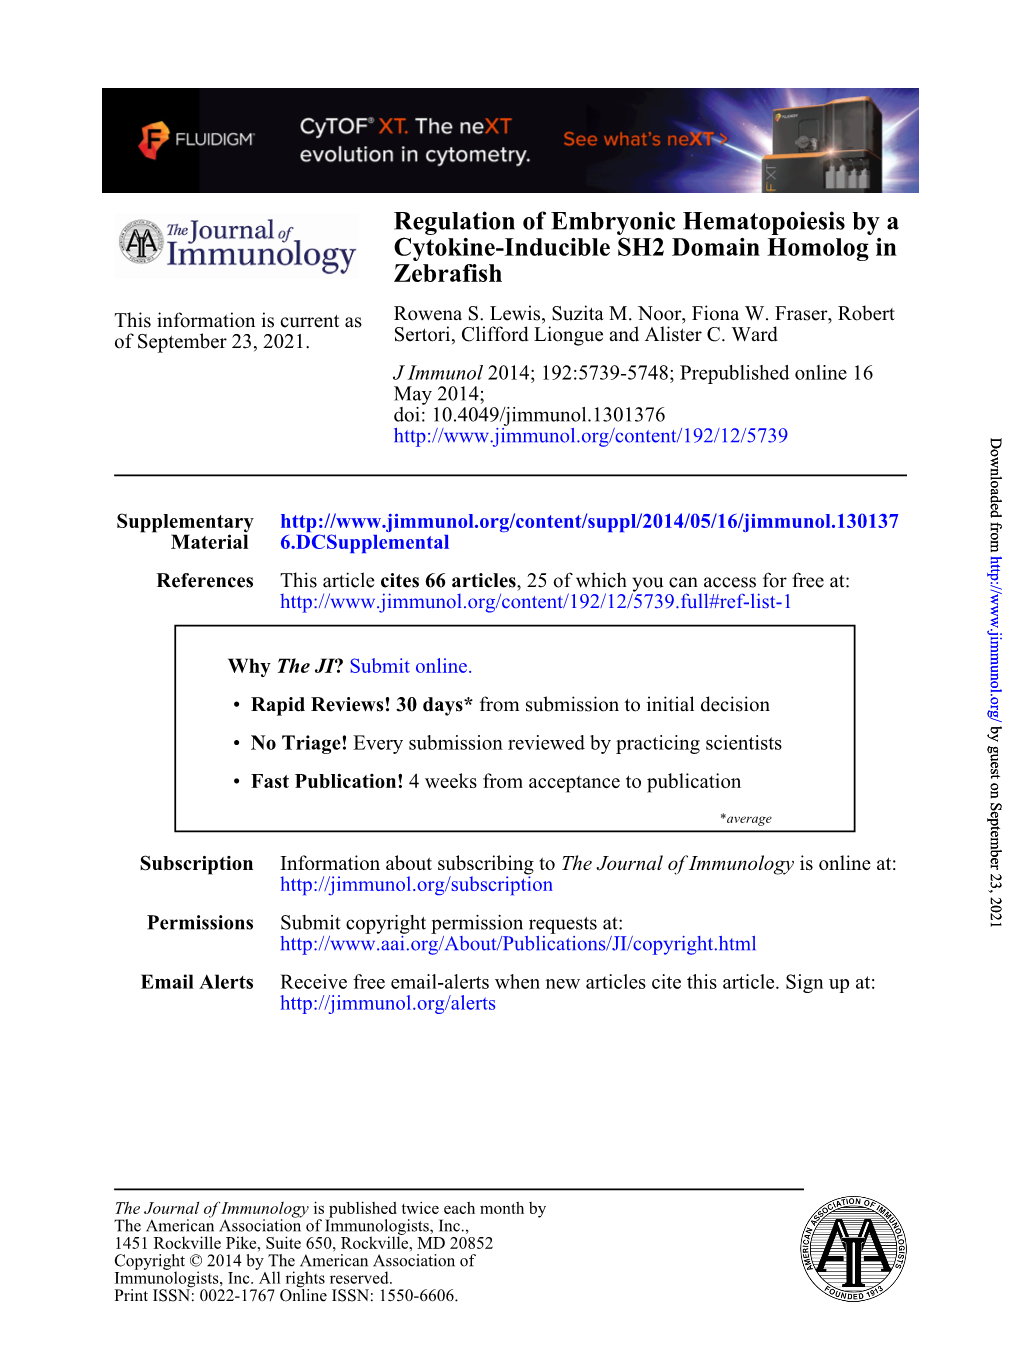 Zebrafish Cytokine-Inducible SH2 Domain Homolog in Regulation Of